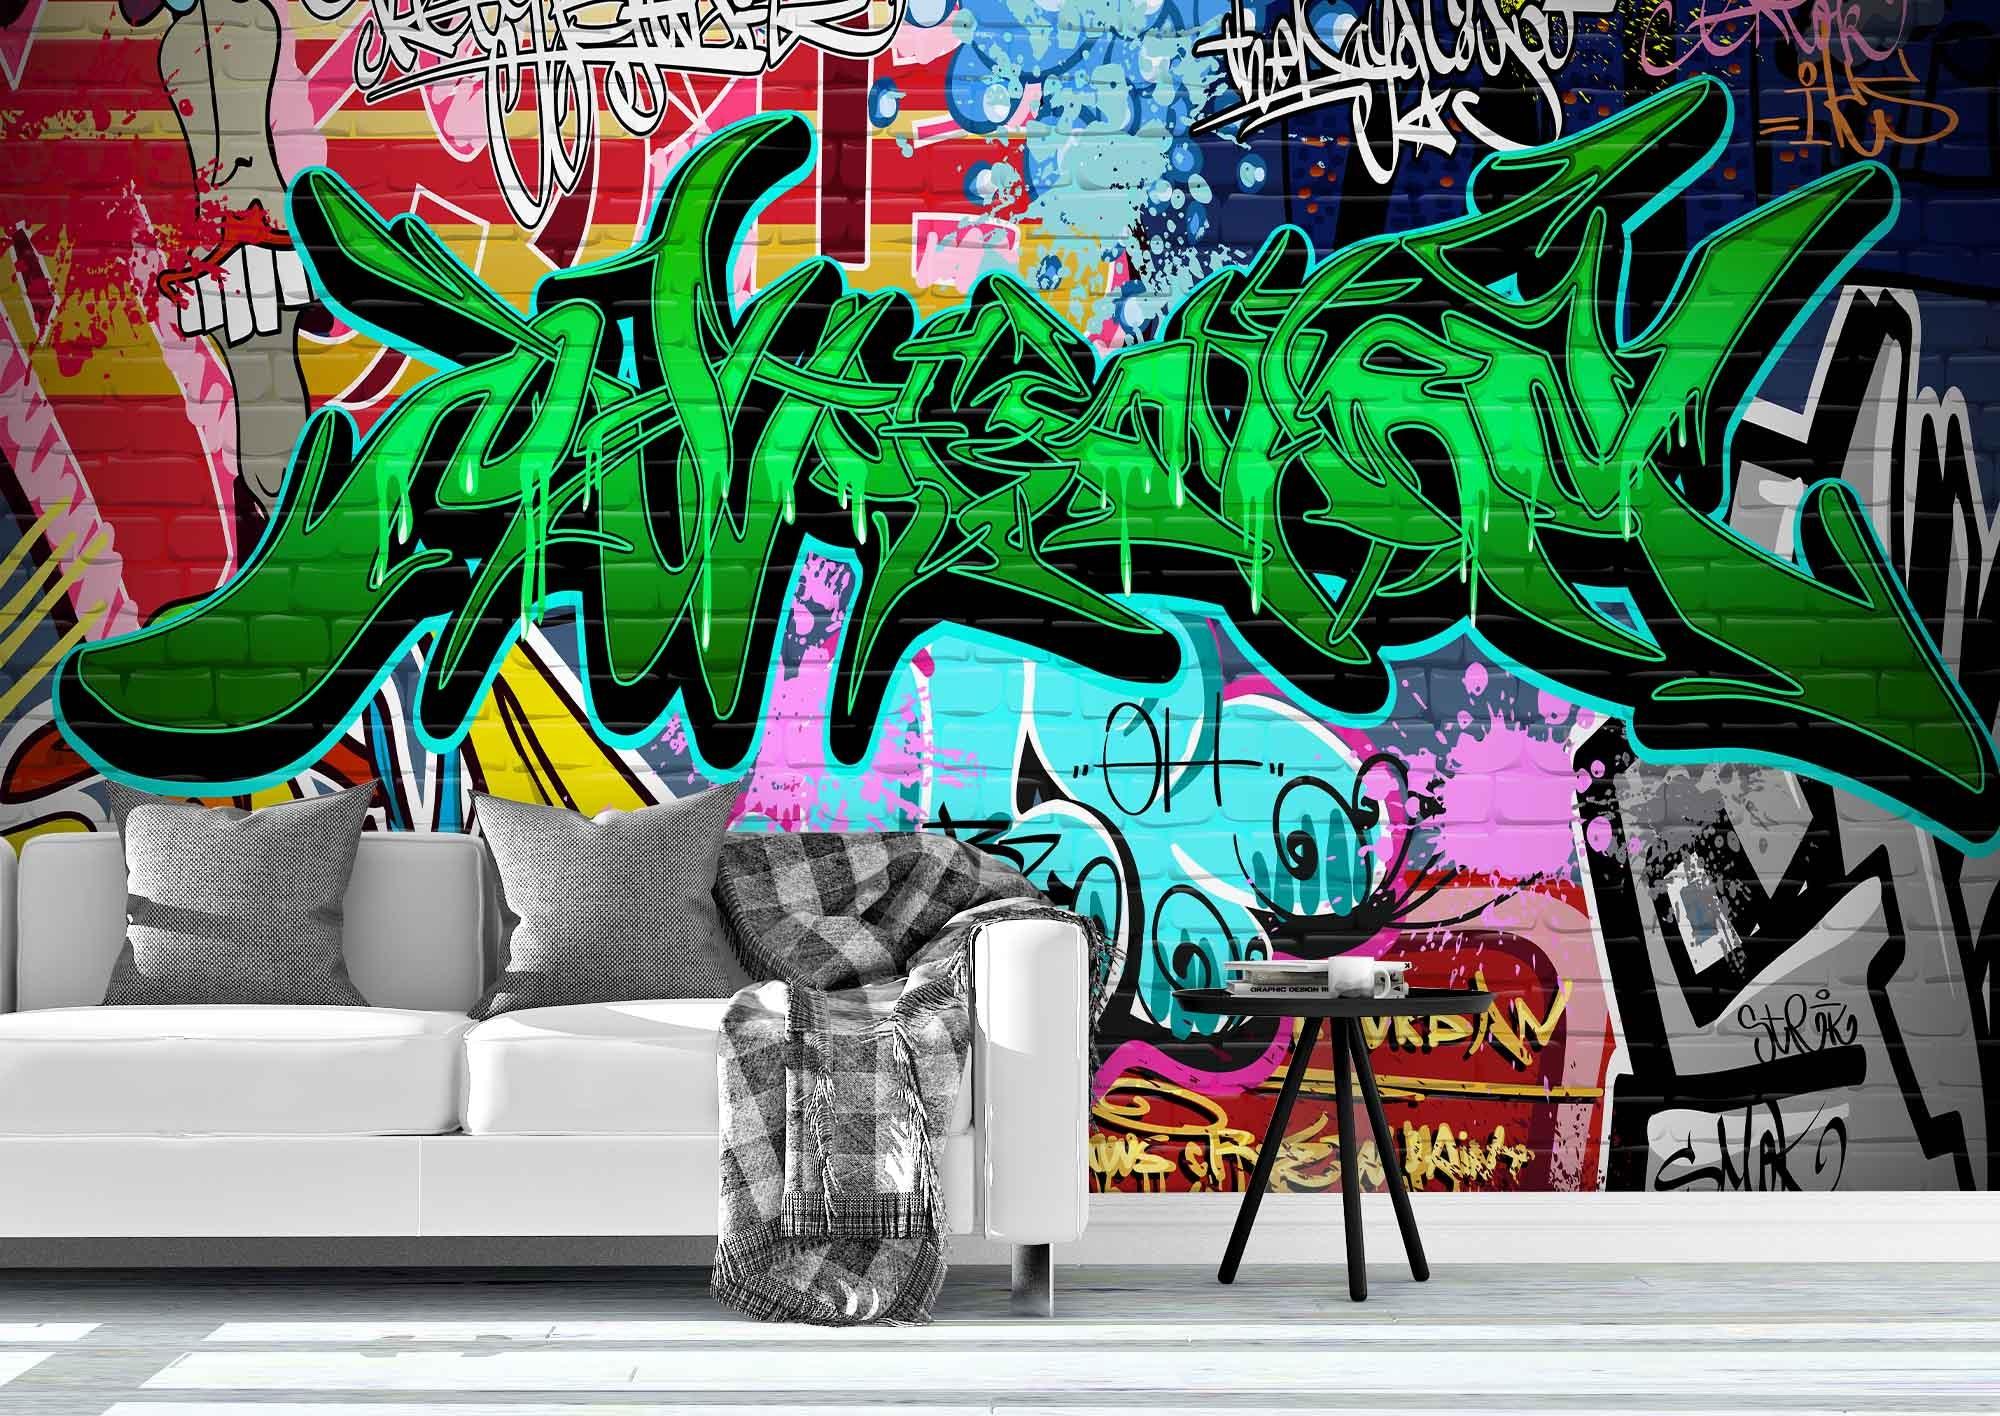 3D Graffiti Wall Mural Wallpaper 248- Jess Art Decoration